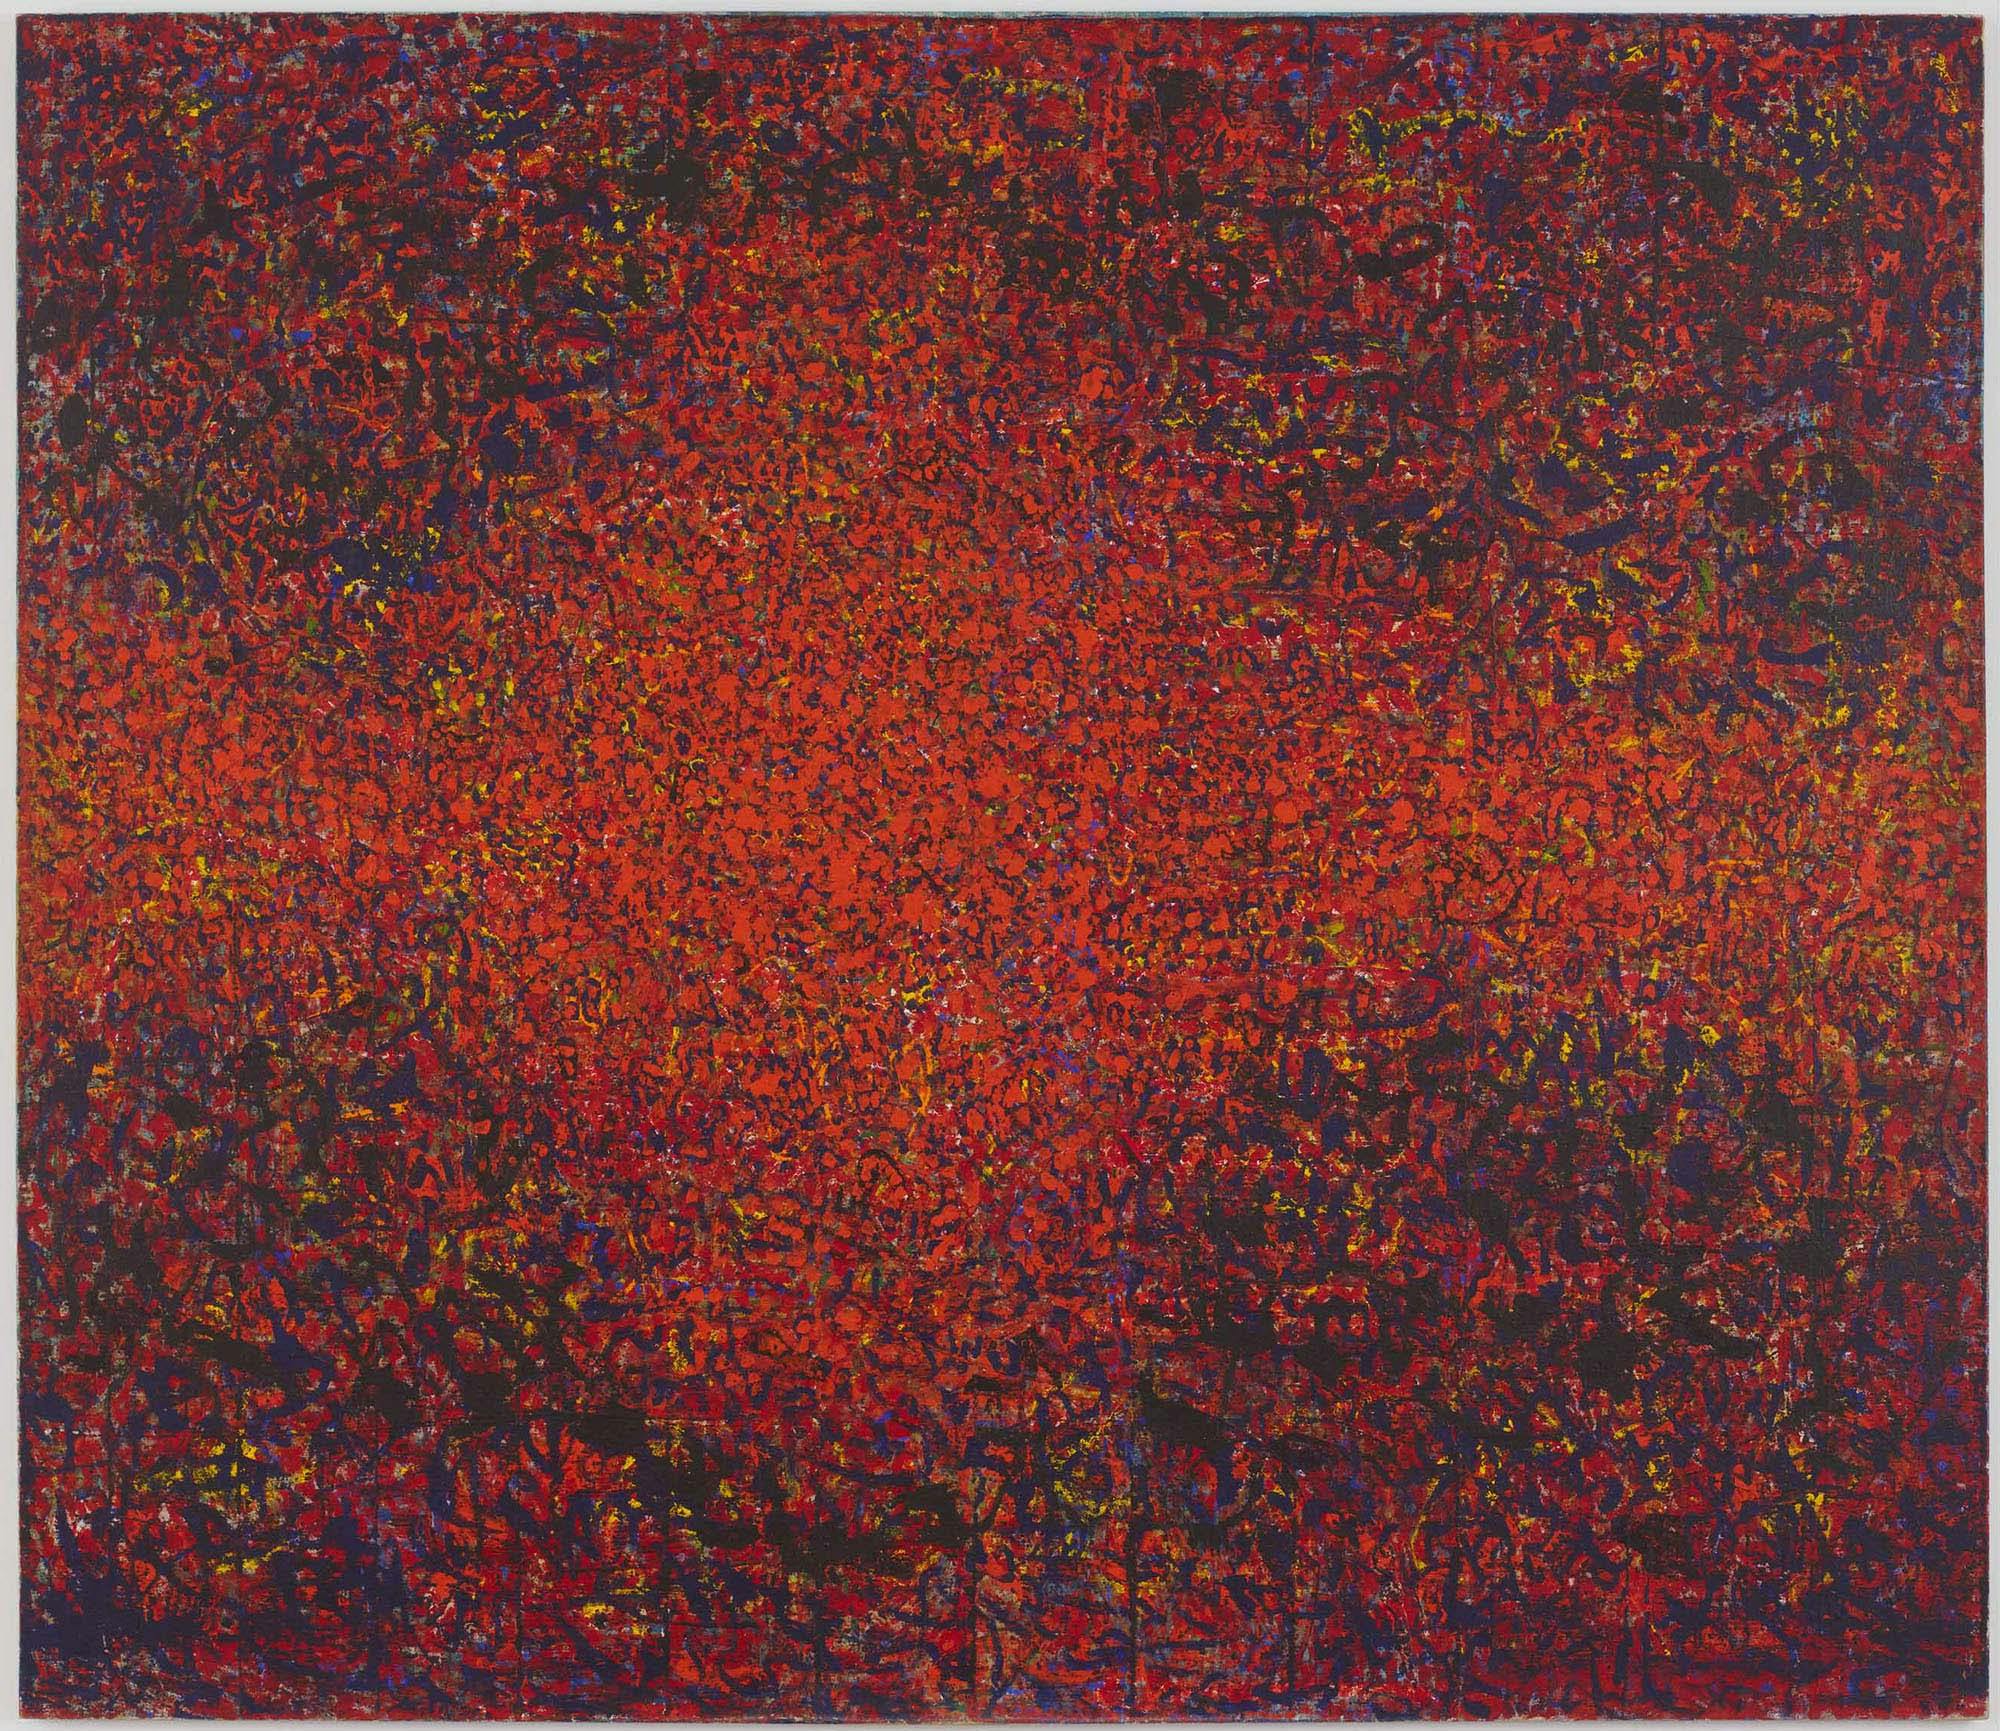 Presence Genesis
1975
Acrylic on linen
96 x 111 in. (243.8 x 281.9 cm)
 – The Richard Pousette-Dart Foundation